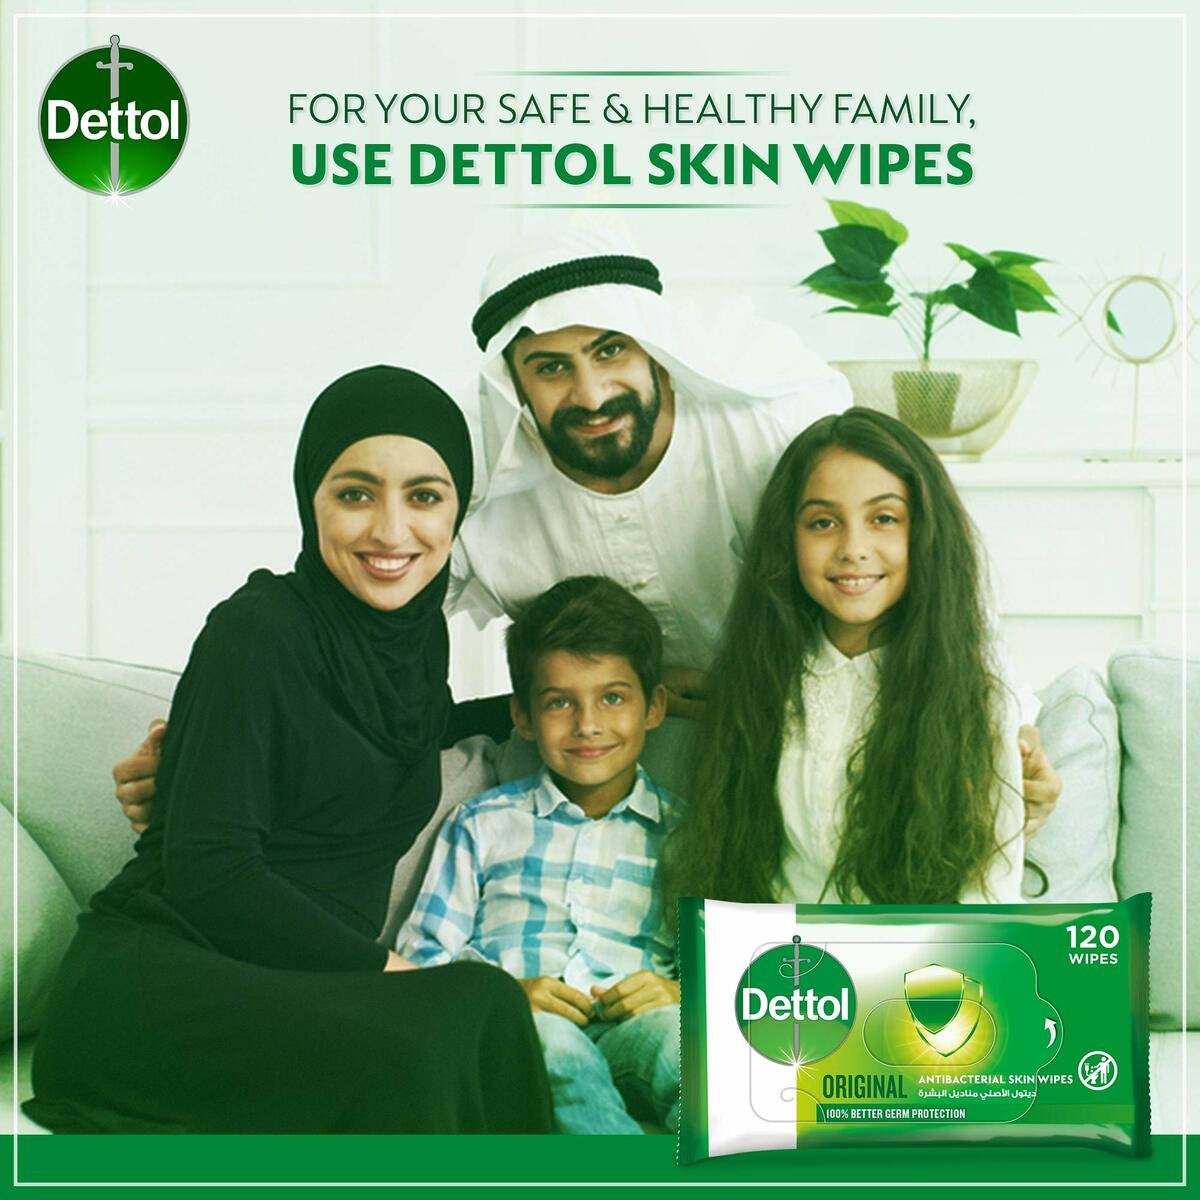 Dettol Original 2 in 1 Antibacterial Skin and Surface Wipes 120 pcs